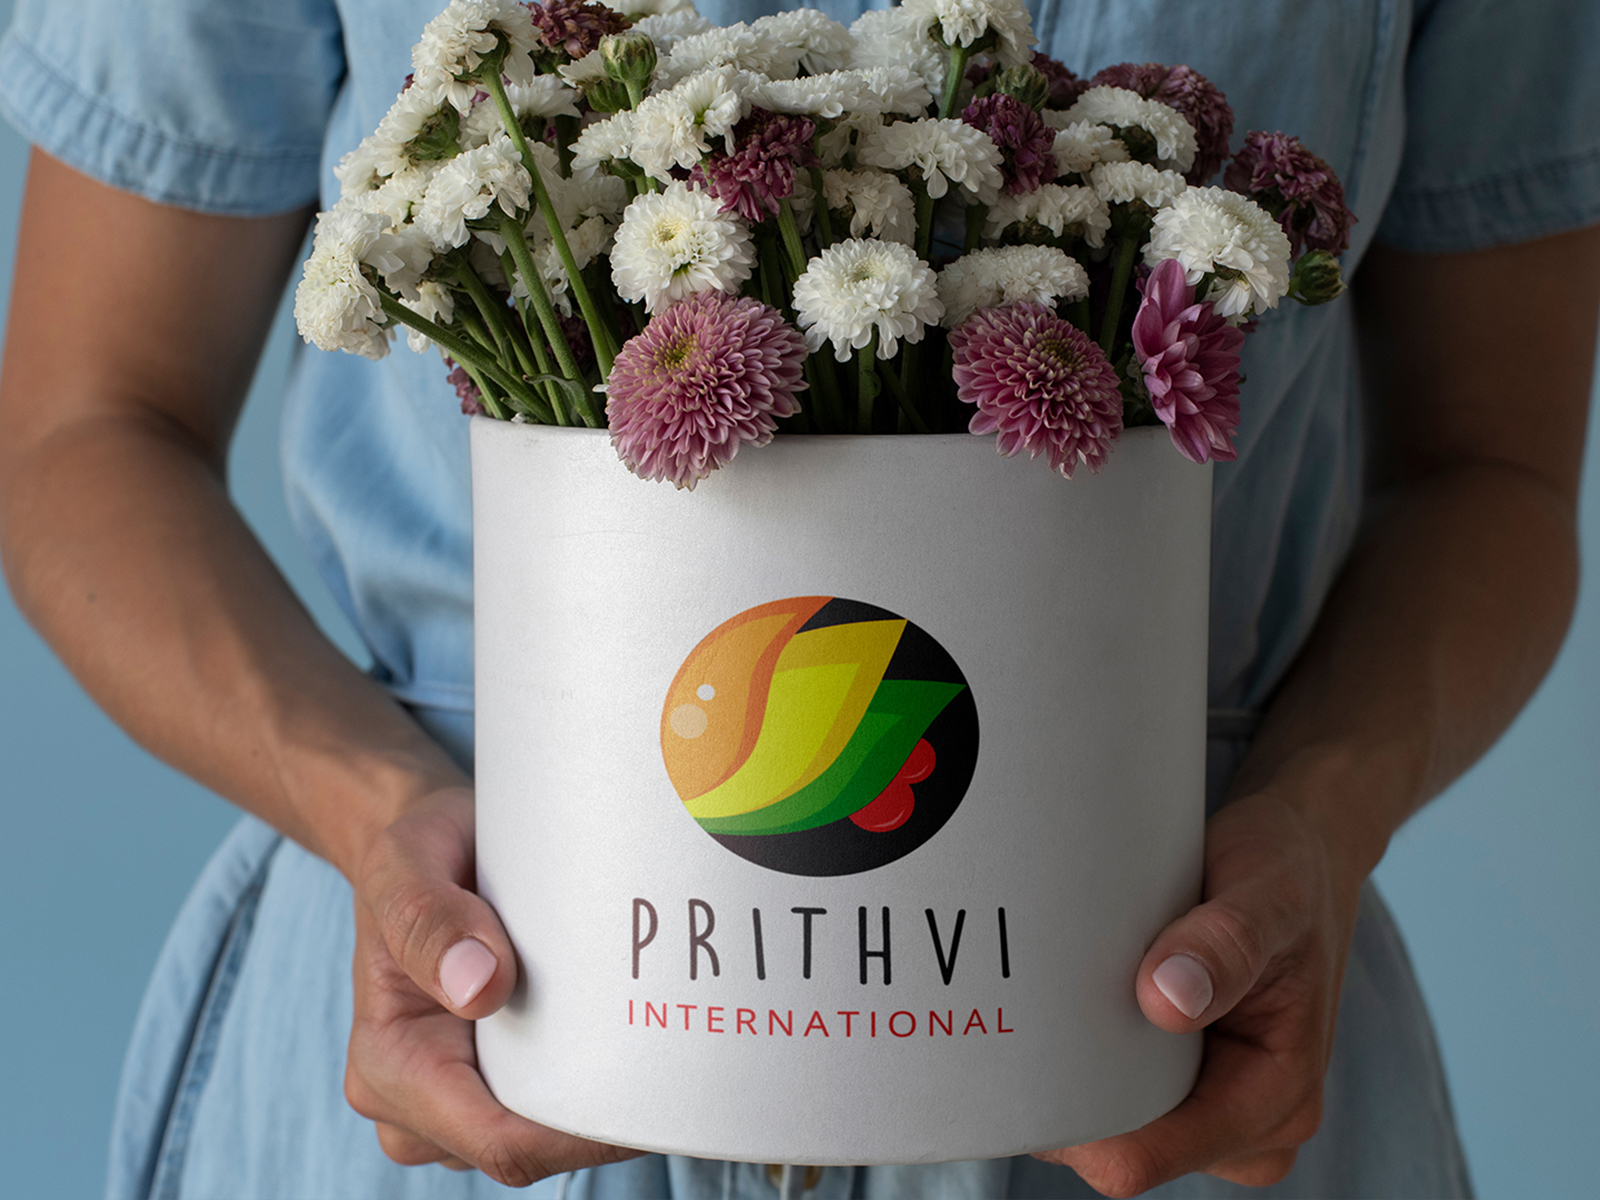 Prithvi International by Addpro Network on Dribbble